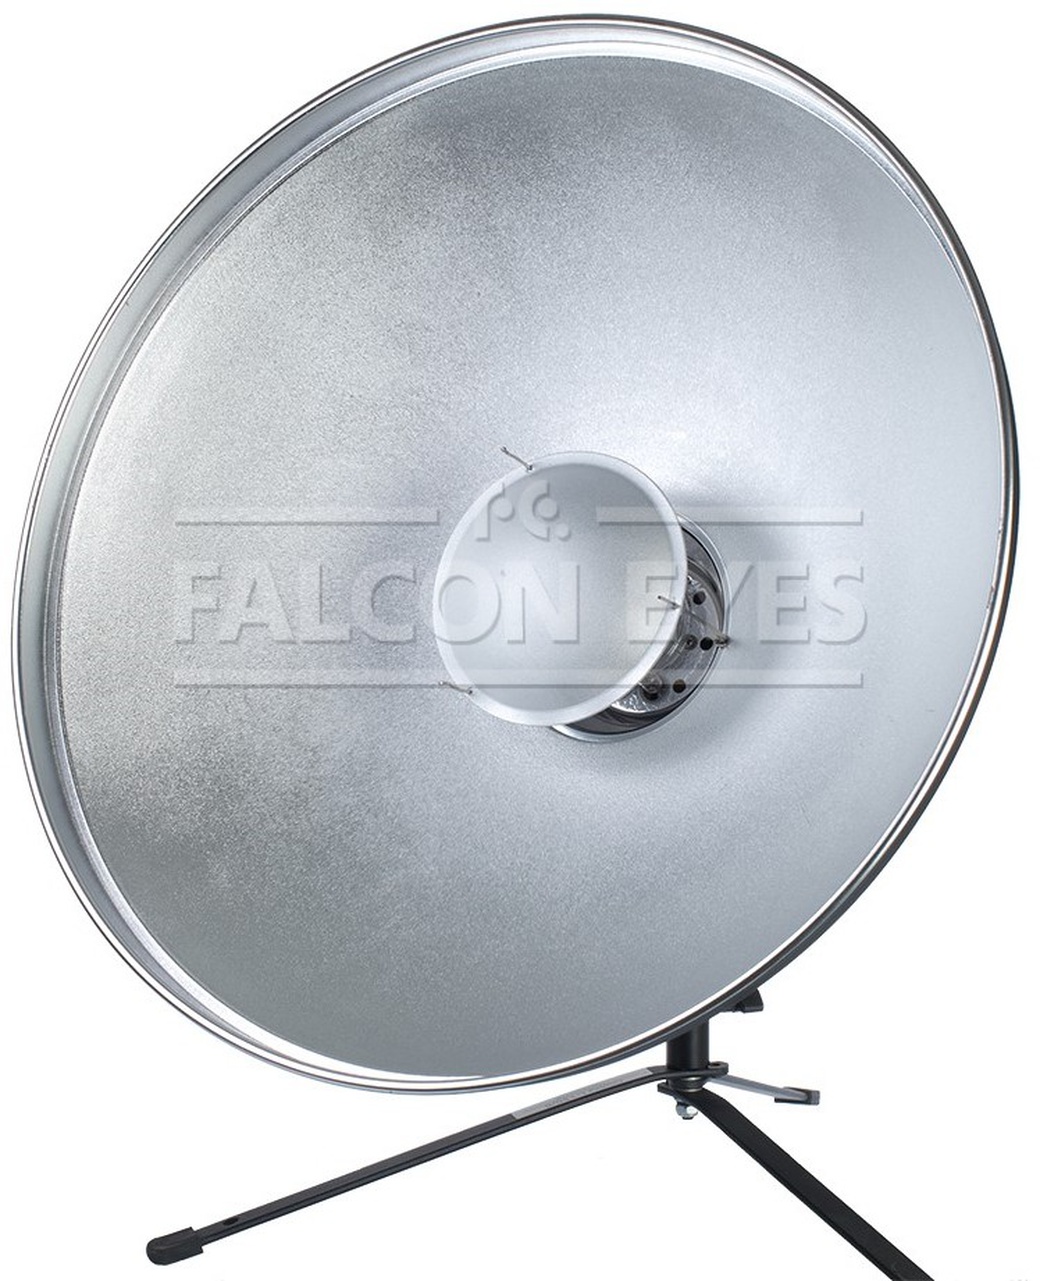 Портретная тарелка Falcon Eyes SR-56T c несъемным байонетом Bowens фото